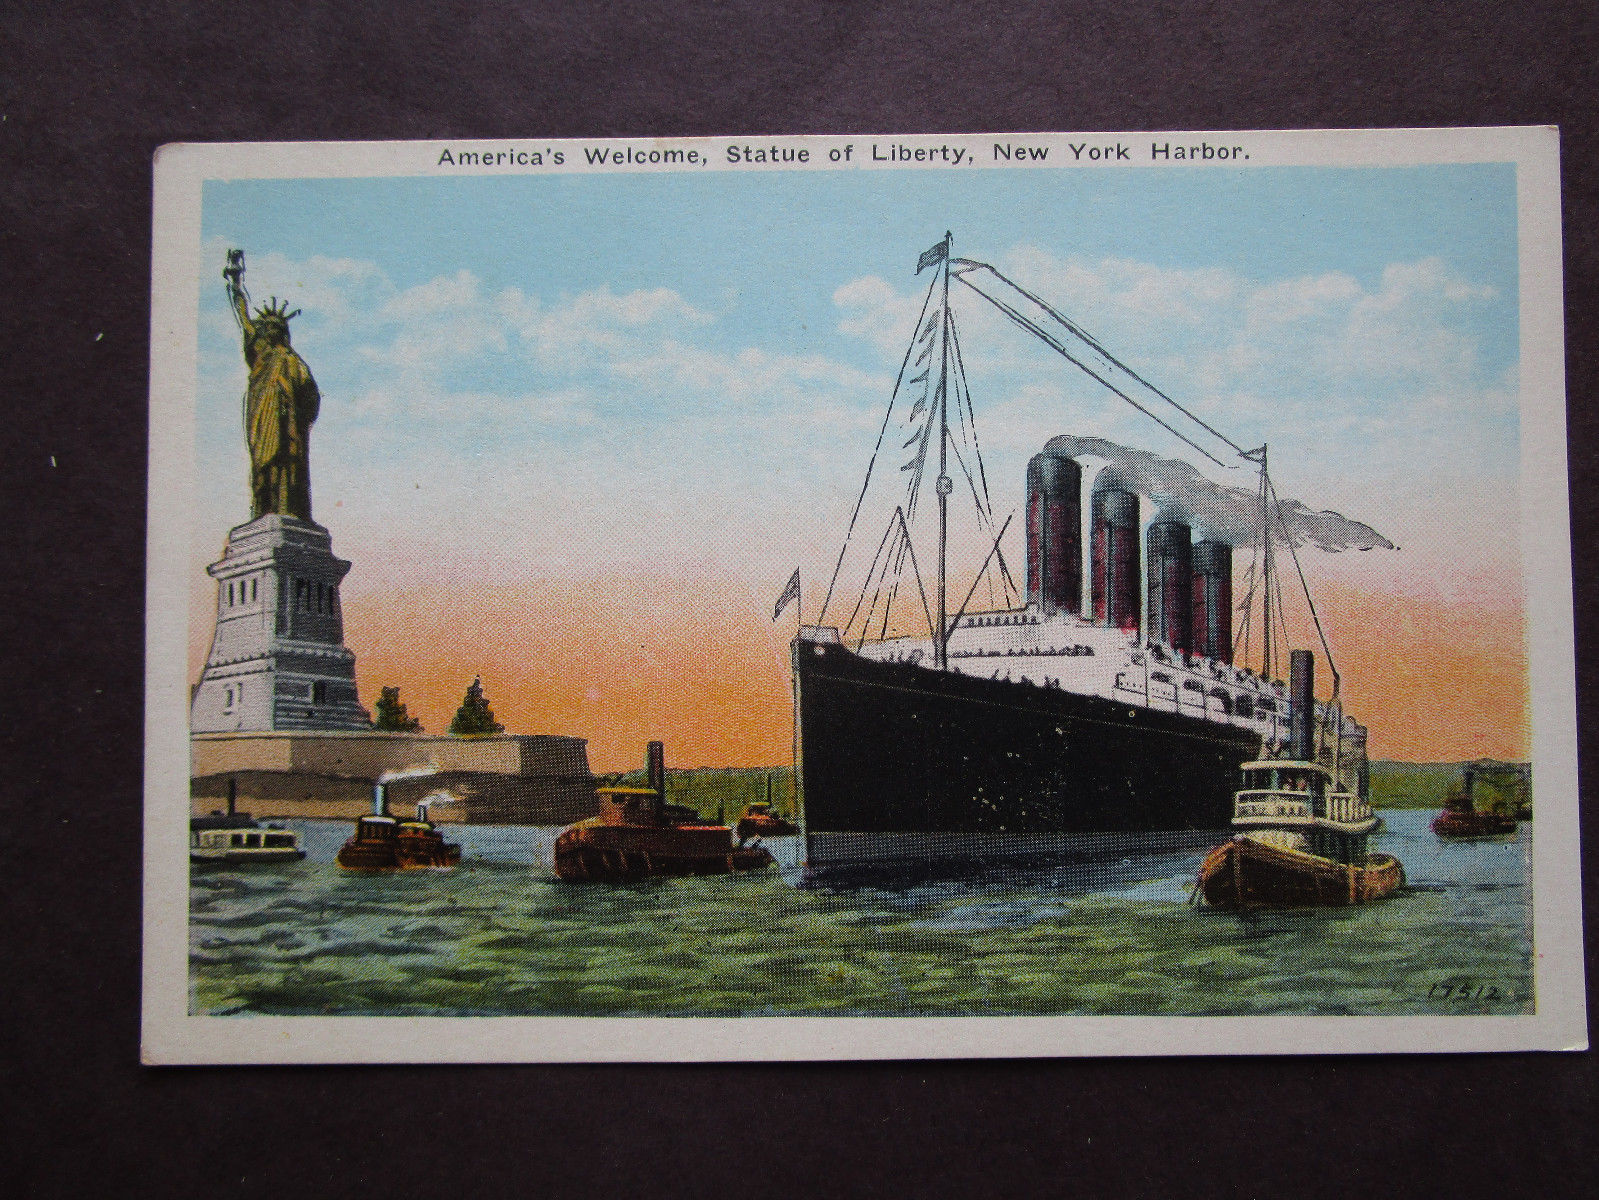 4-Stack Steamship, Tug Boats, Statue of Liberty, New York City.jpg